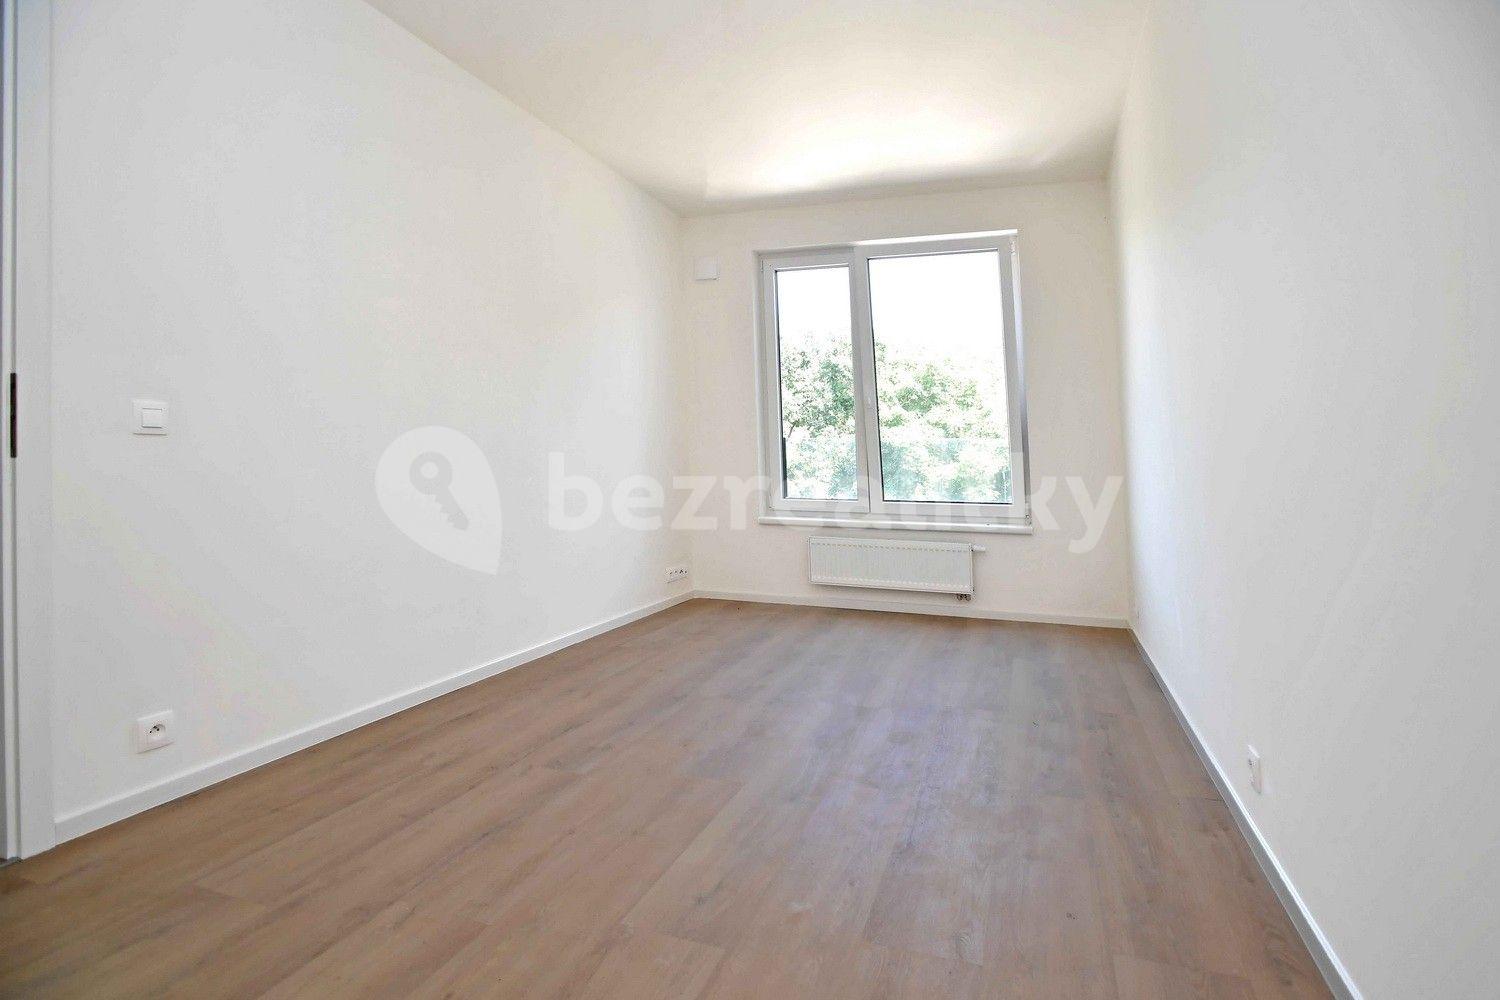 1 bedroom with open-plan kitchen flat for sale, 53 m², K Jezeru, Prague, Prague